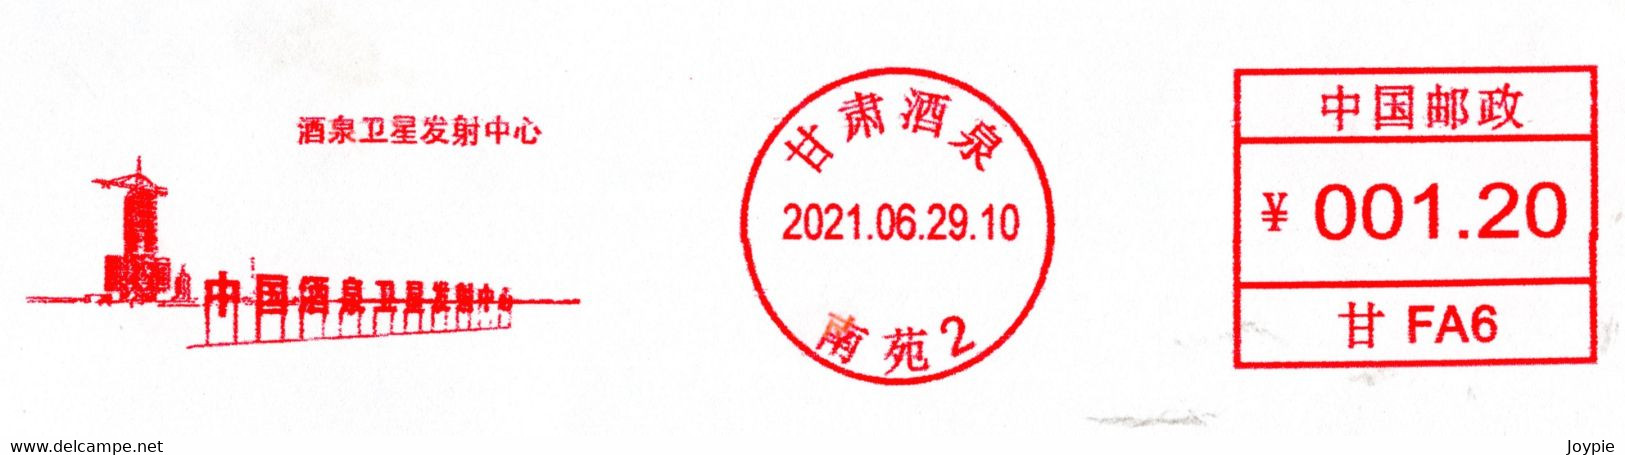 China 2021 JiuQuan Postage Machine Meter FDC:China Jiuquan Satellite Launch Center; Rocket Launch Postmark(black) - Briefe U. Dokumente